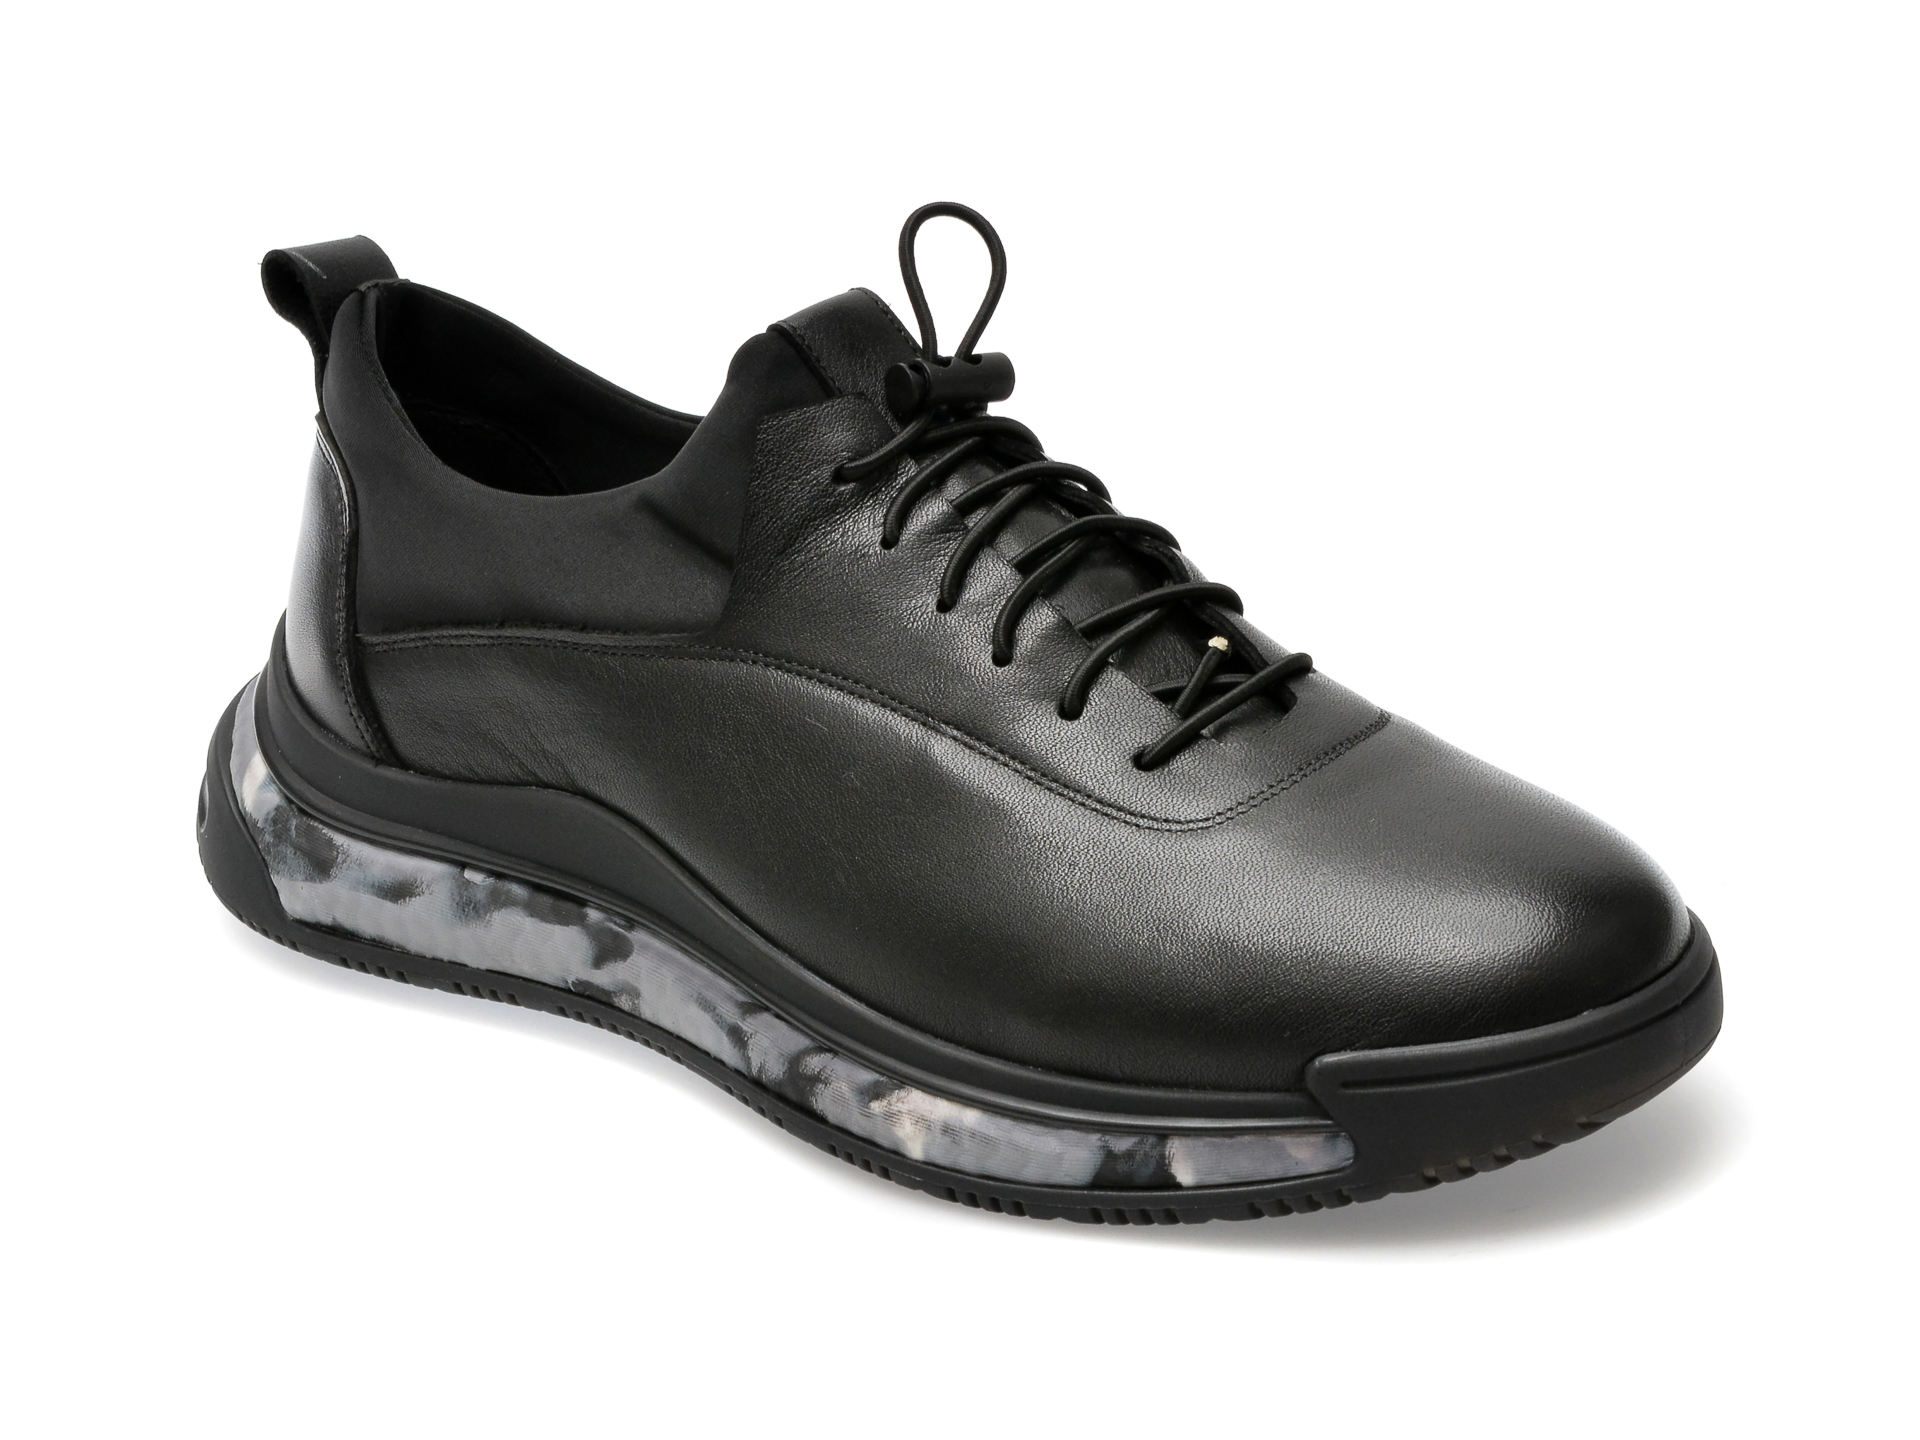 Pantofi OTTER negri, 899, din piele naturala /barbati/pantofi